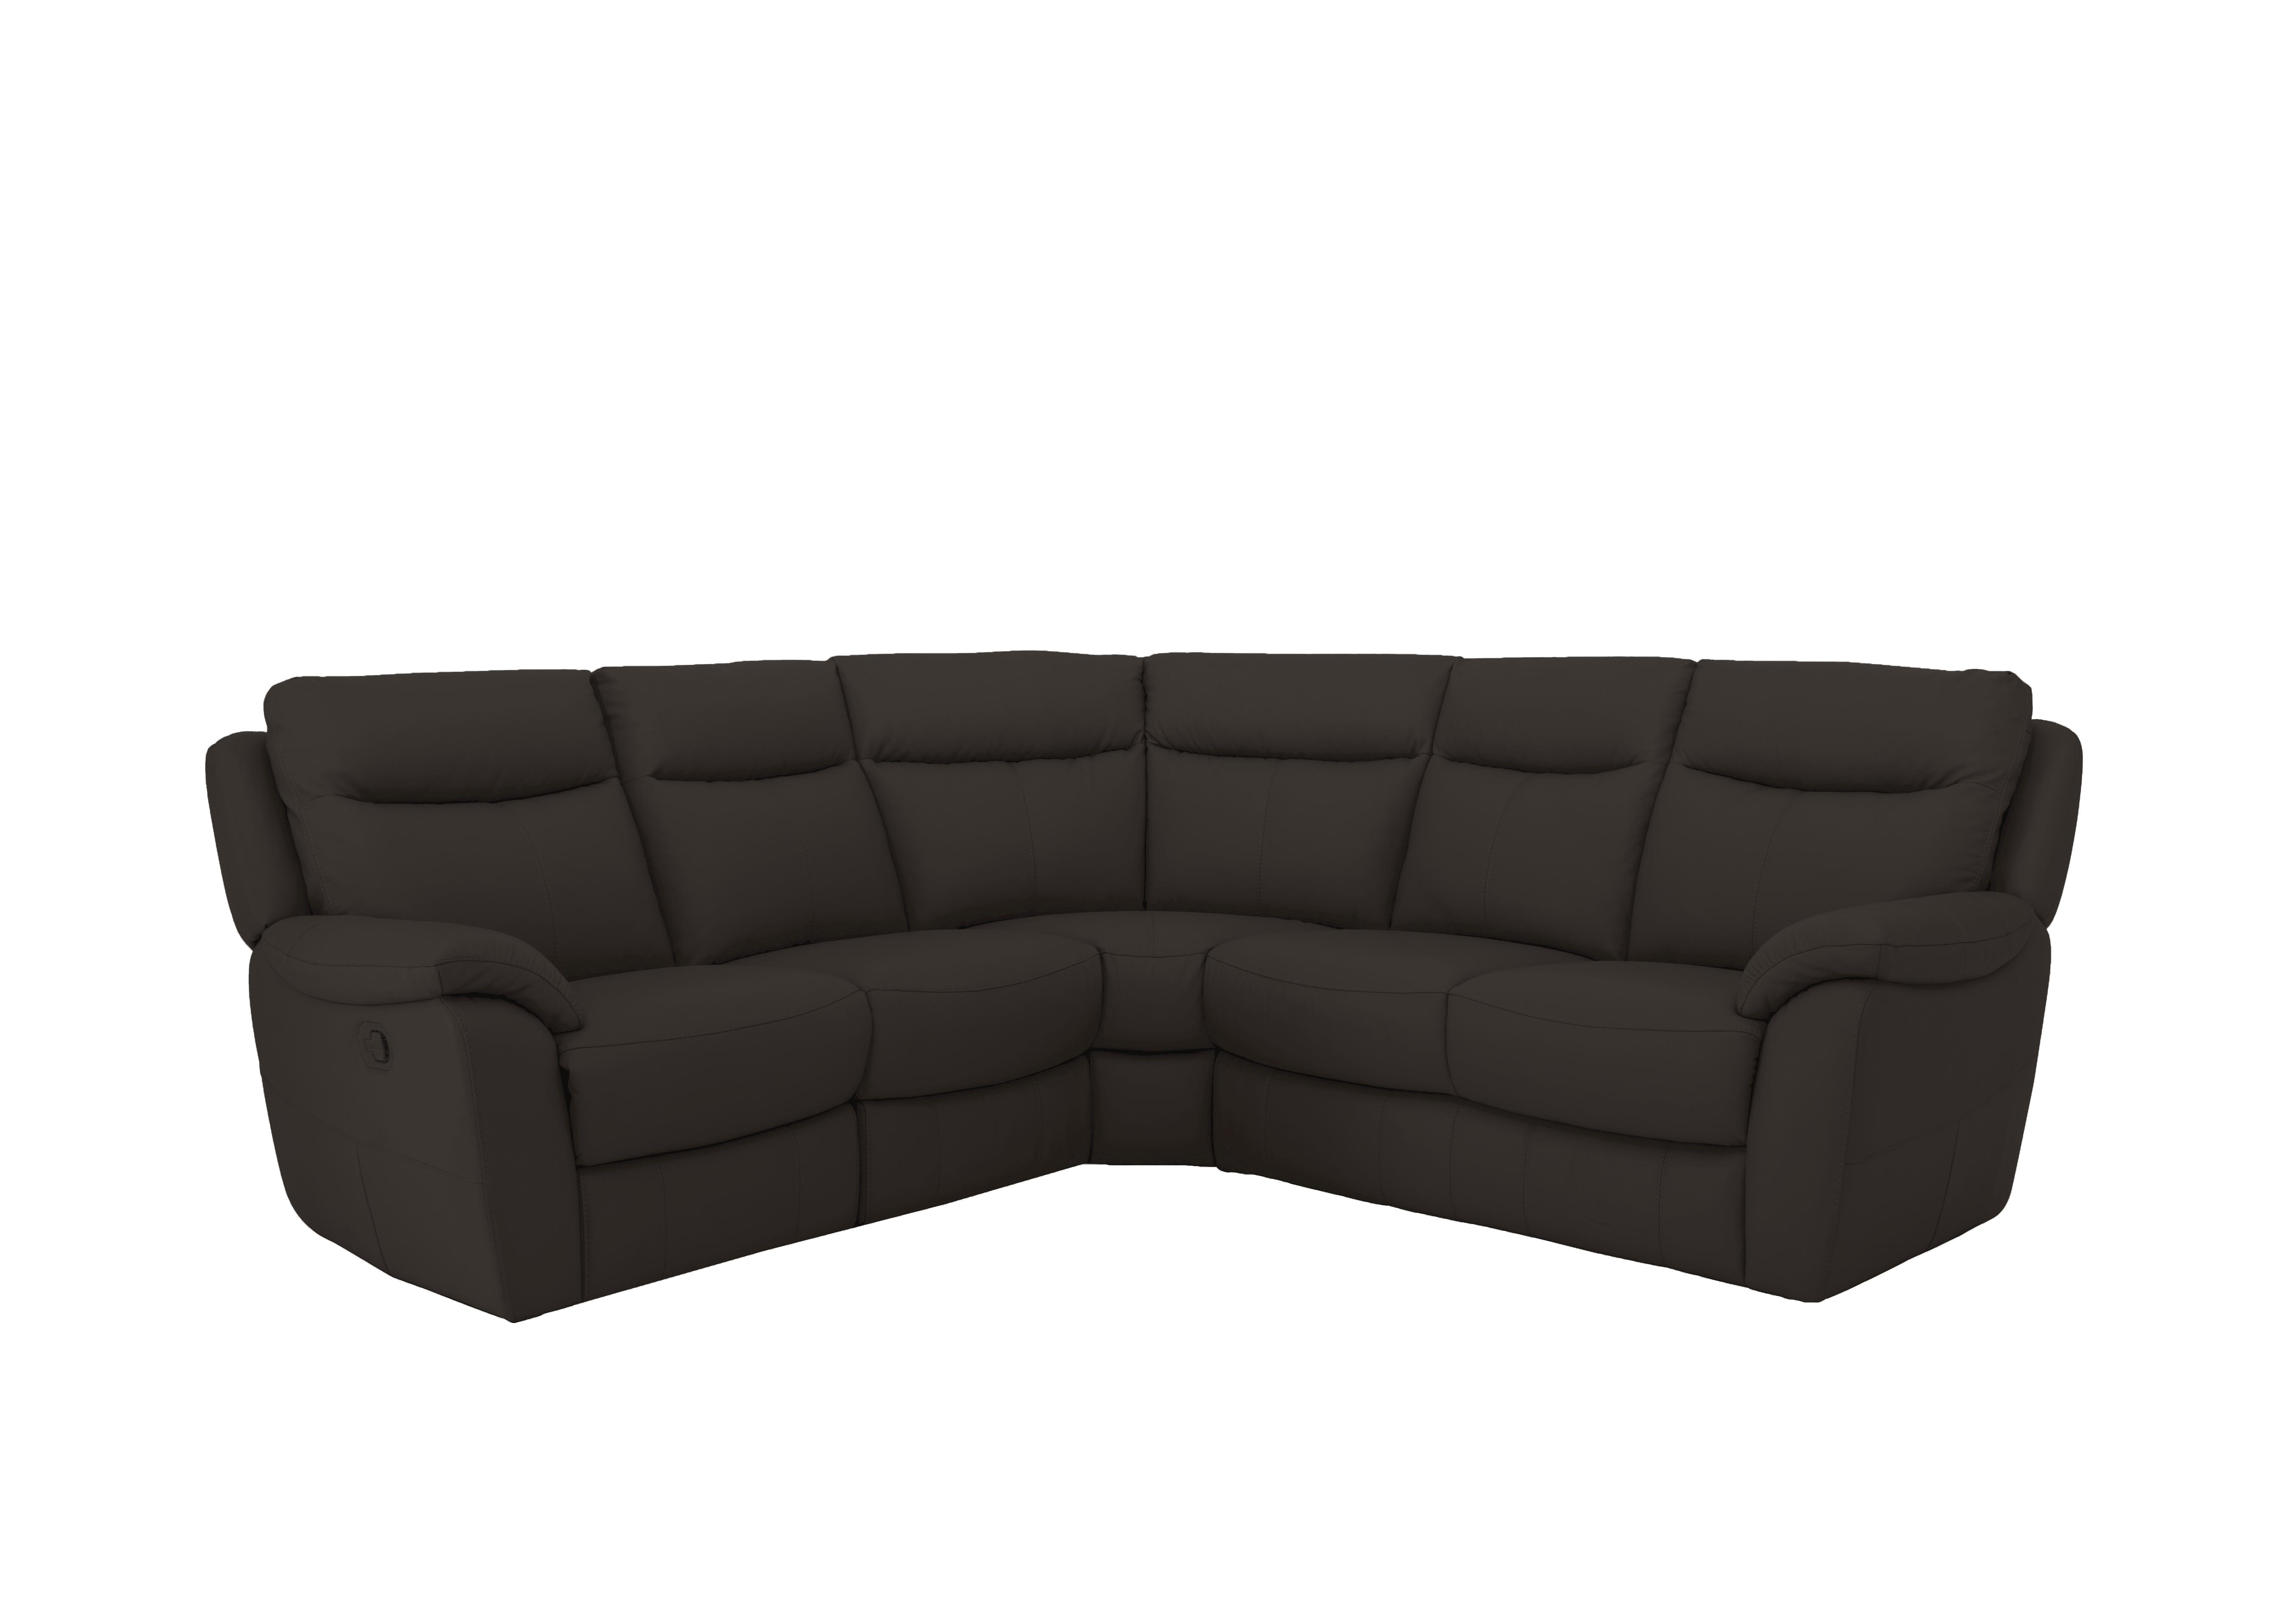 Snug Leather Corner Sofa in Bv-1748 Dark Chocolate on Furniture Village